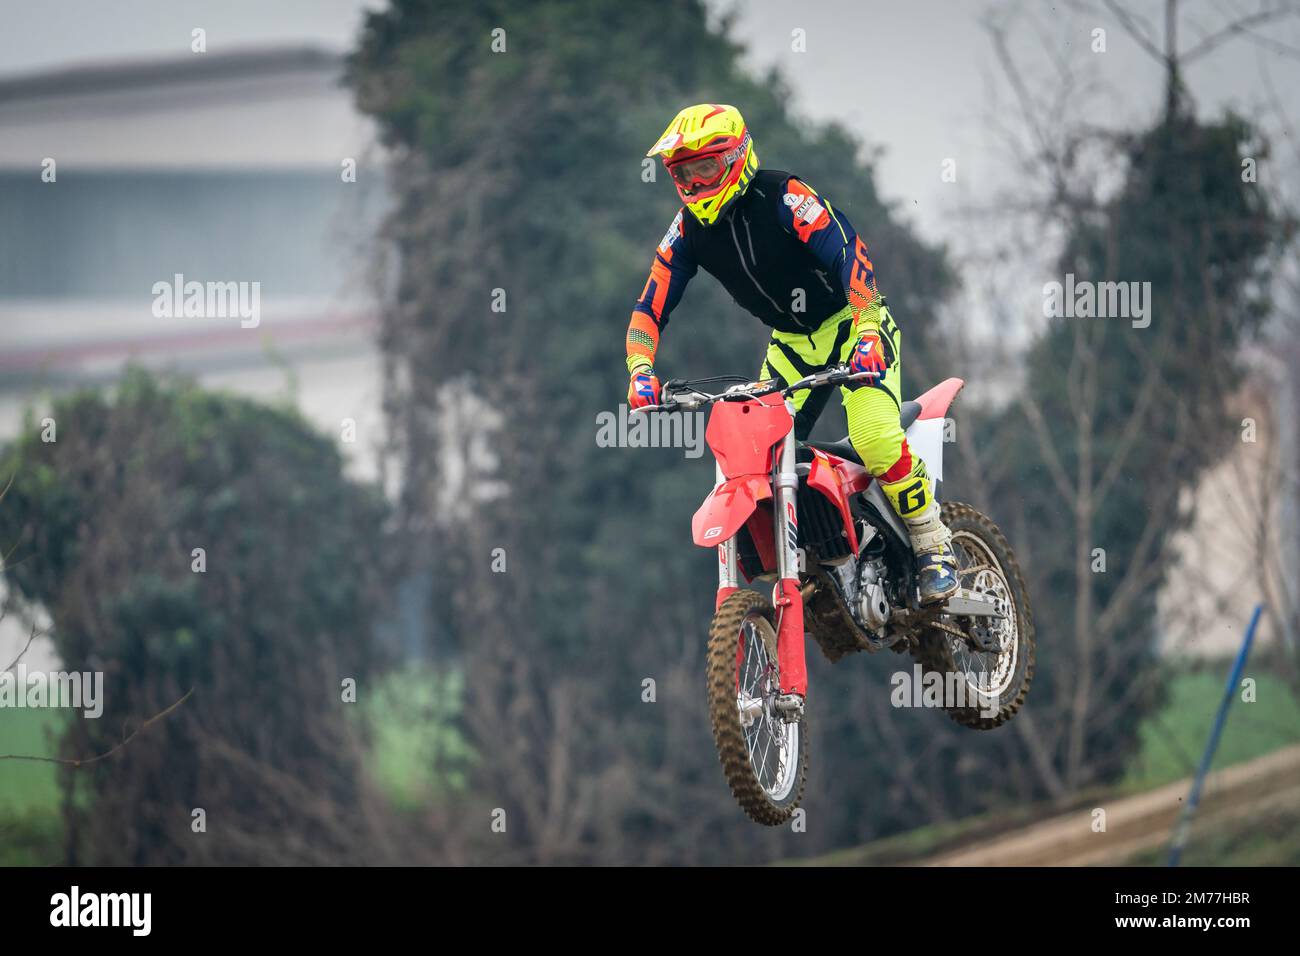 Crema, Italy – 12/2022: Motocross bike performing stunts on training track Stock Photo